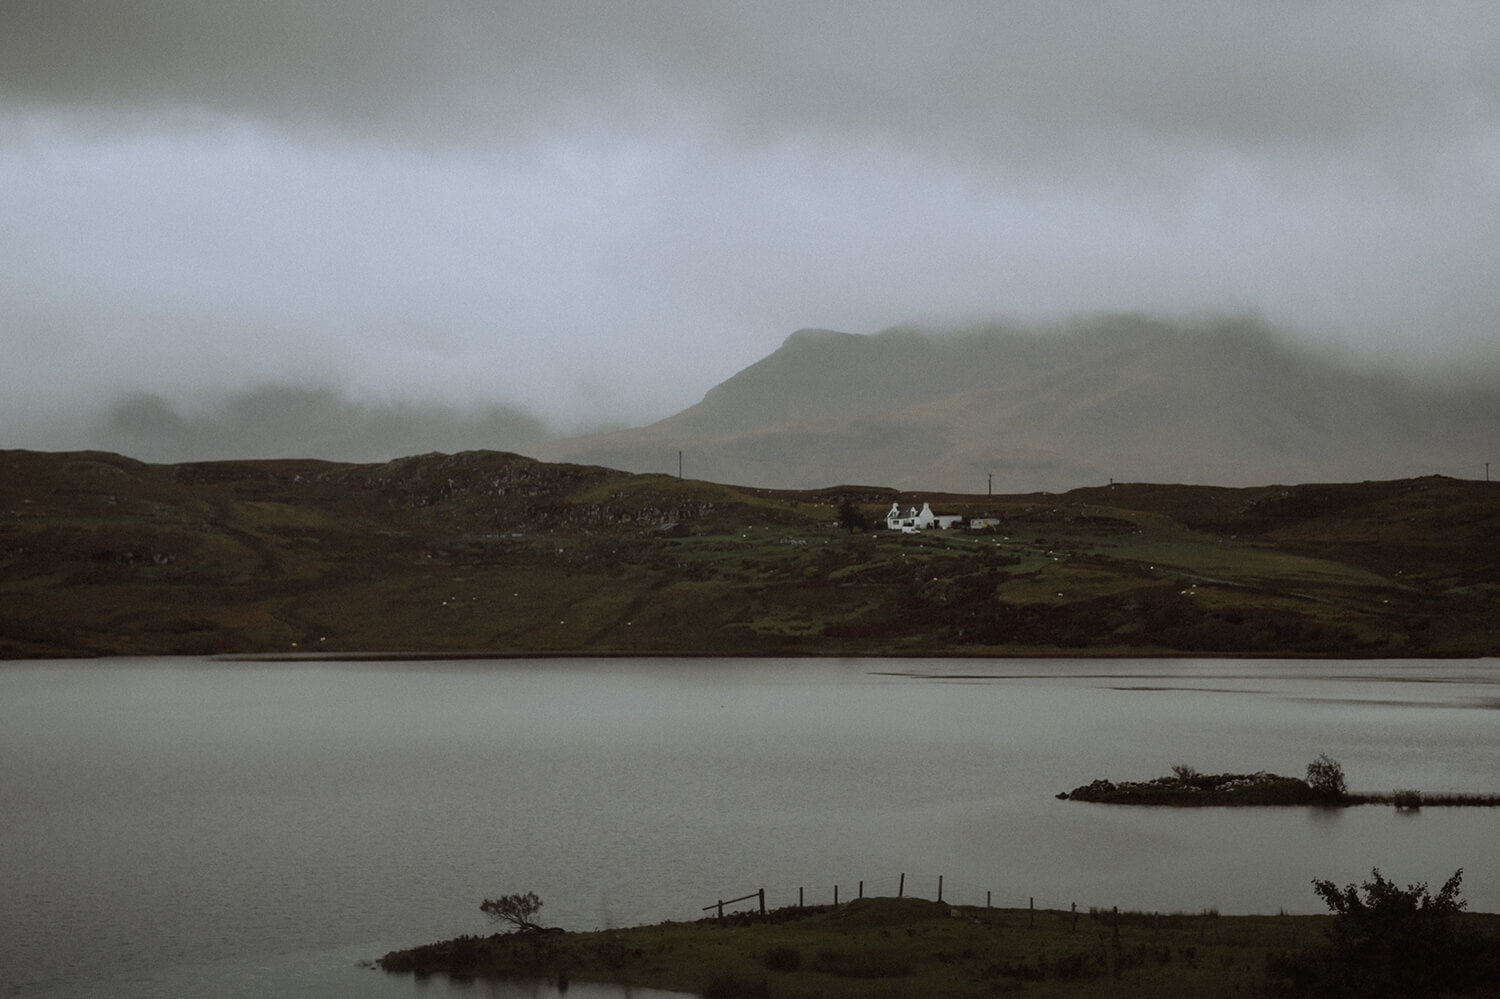 Scottish landscapes are stunning.